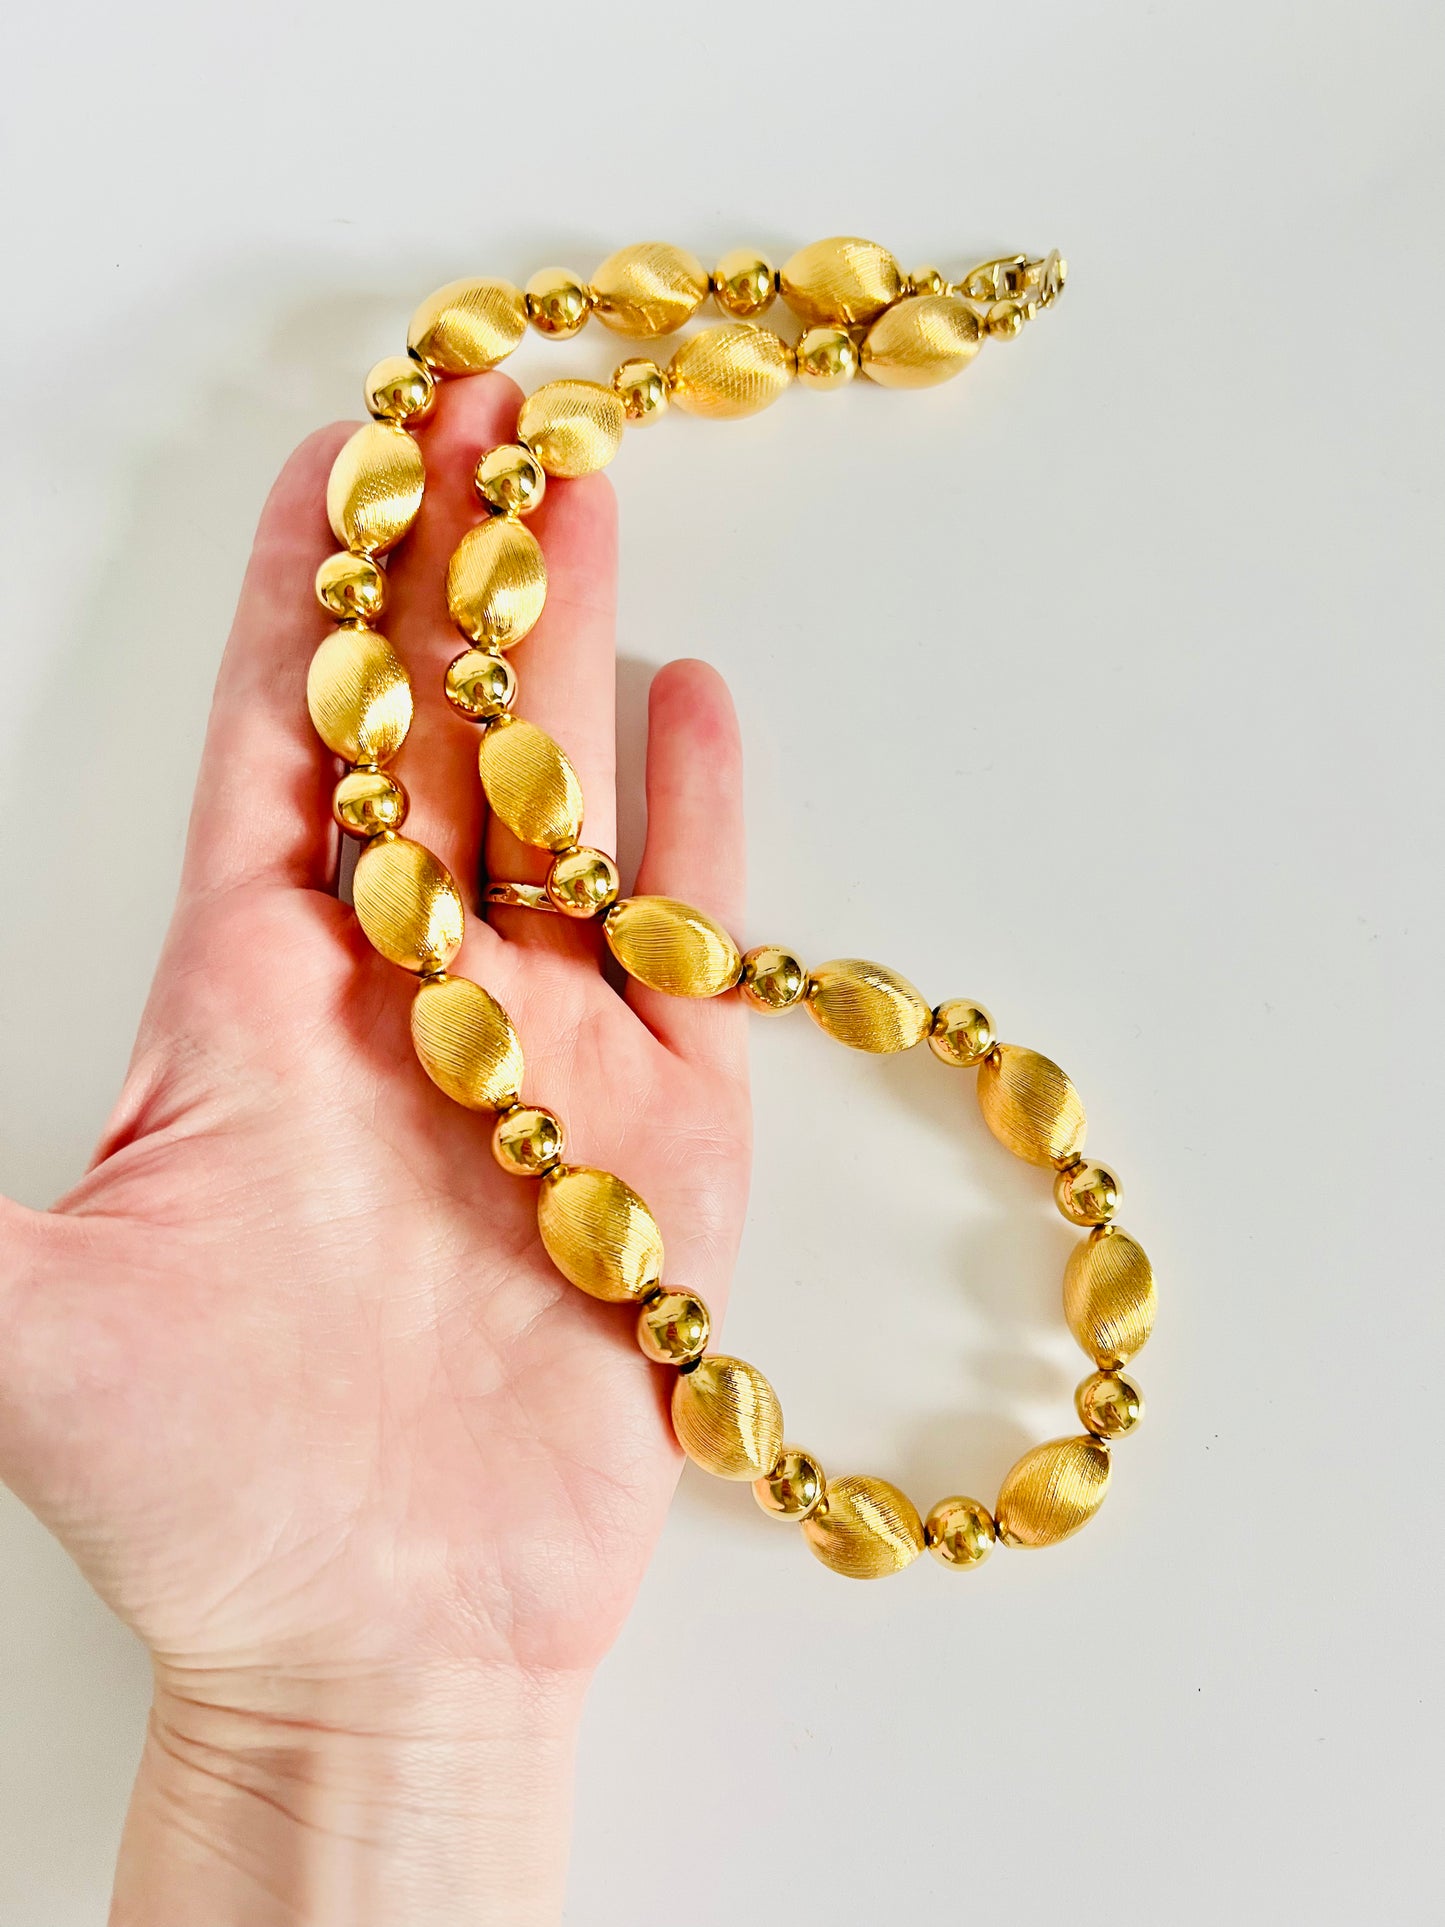 Vintage 1960s Brushed Gold Oval Bead Necklace